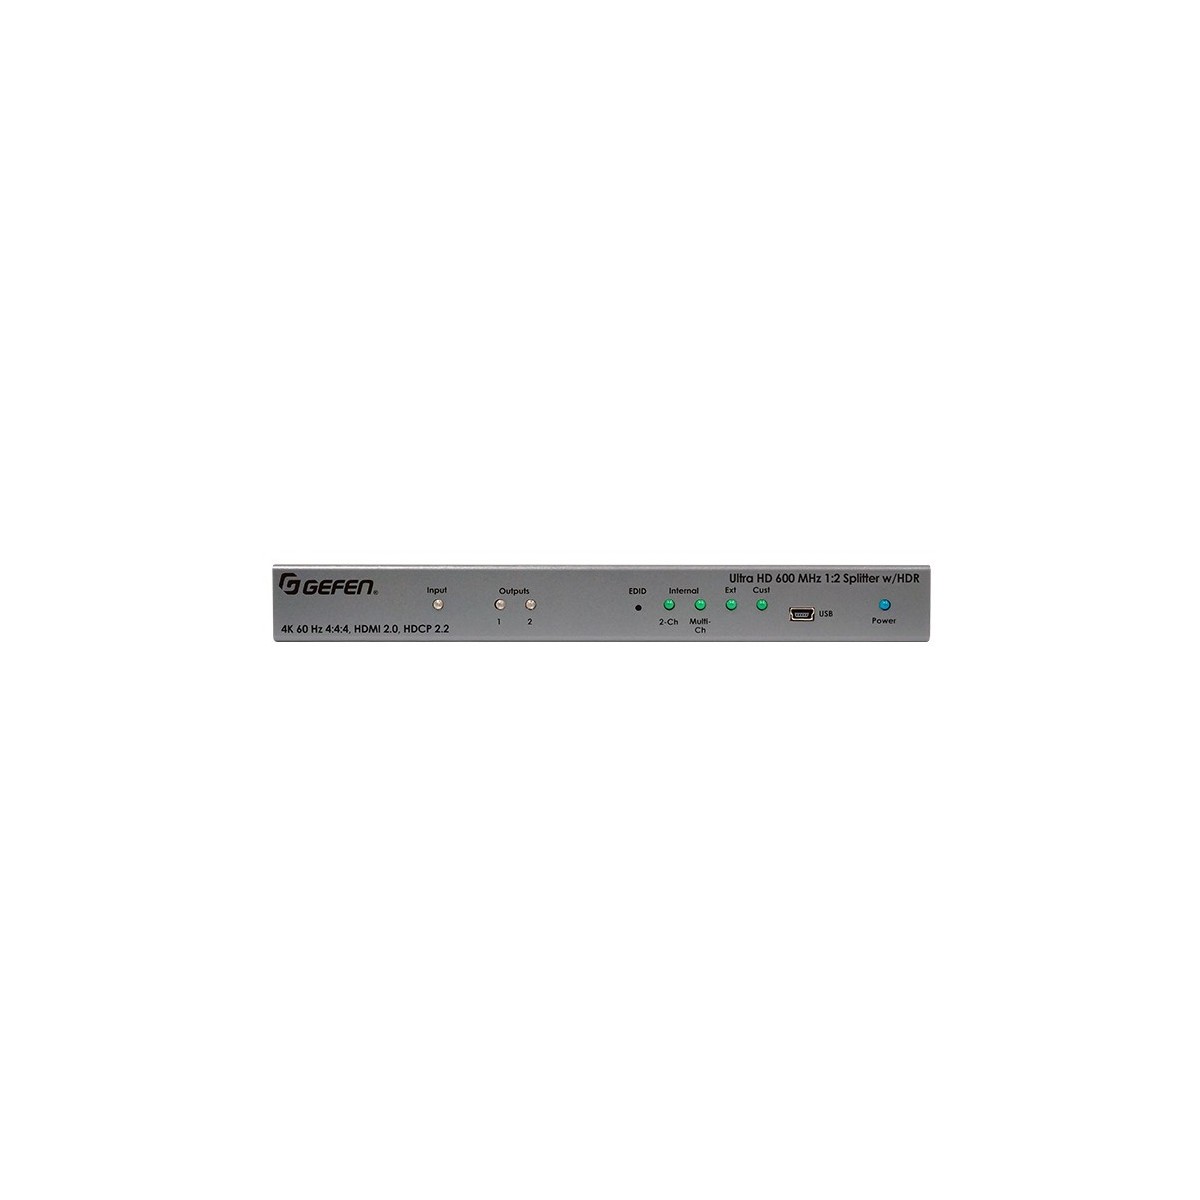 Gefen EXT-UHD600-12 - HDMI - 2x HDMI - 4096 x 2160 pixels - Gray - 10 bit - 600 MHz